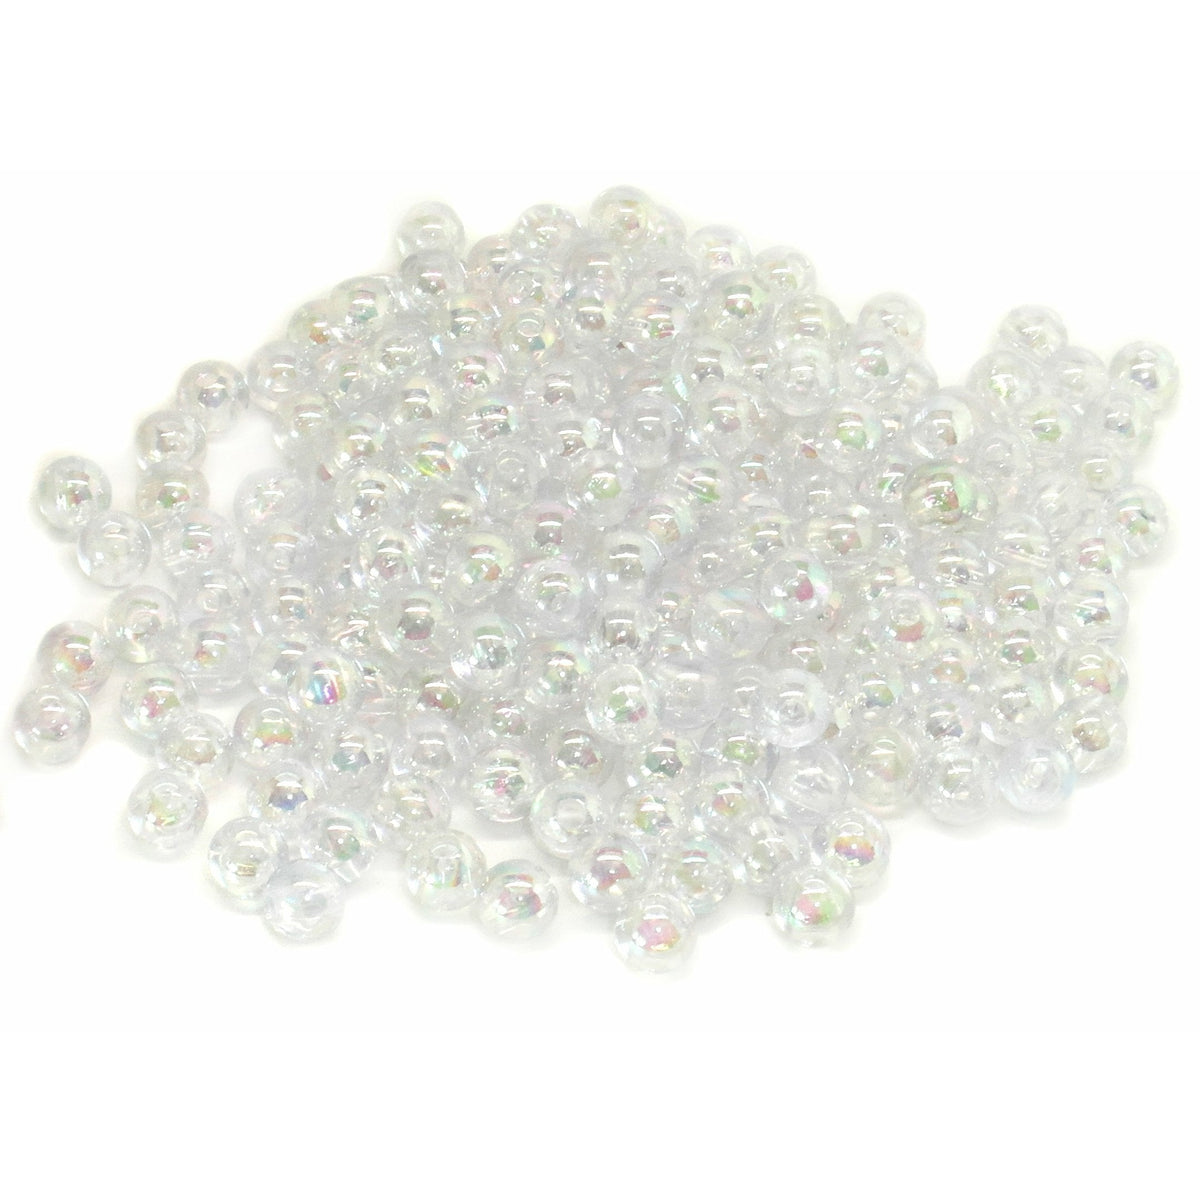 Plastic Beads | Acrylic Beads | Julz Beads